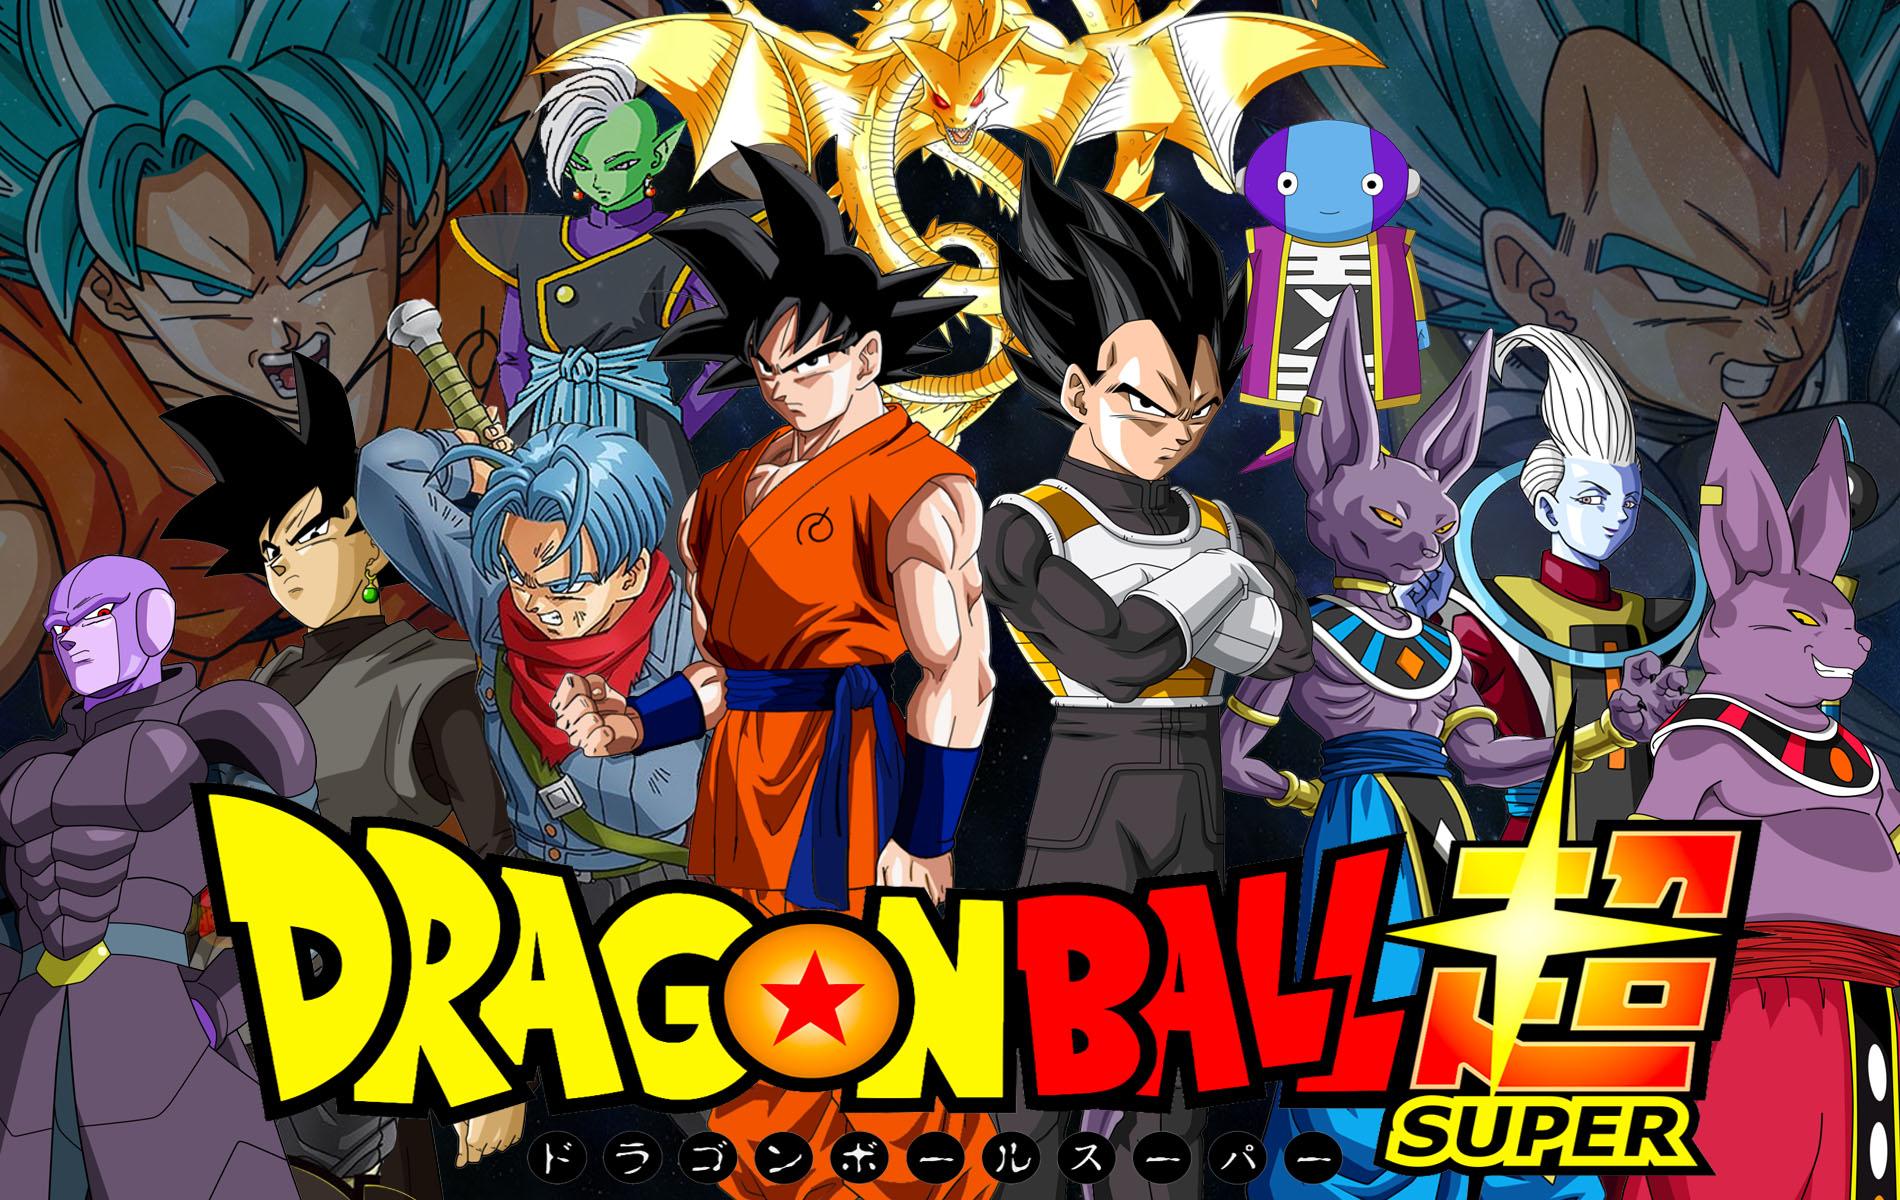 Dragon Ball Super  Cartoon Network Brasil